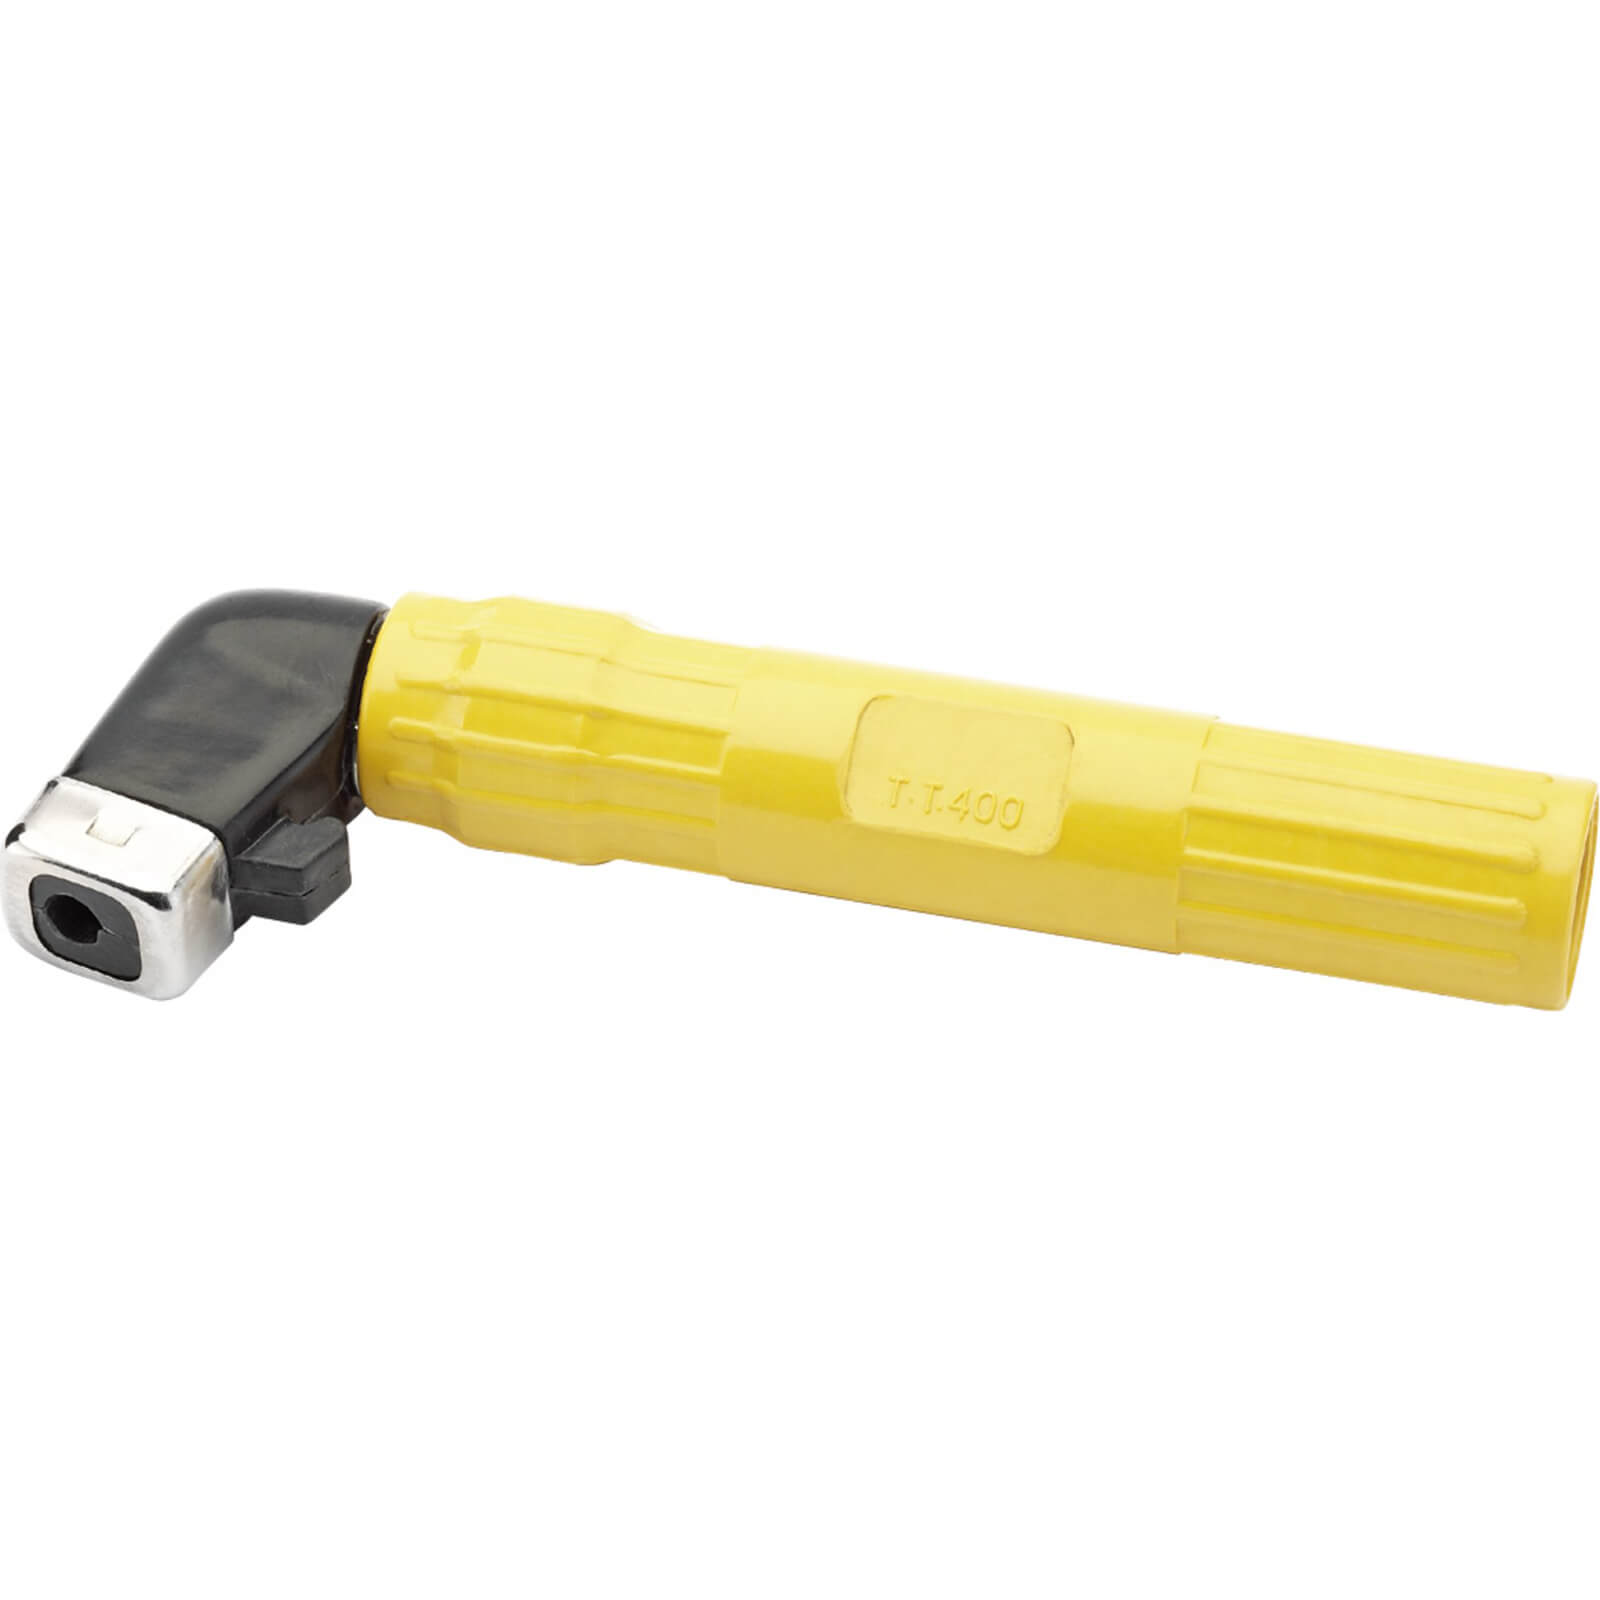 Image of Draper Twist Grip Electrode Holders Yellow